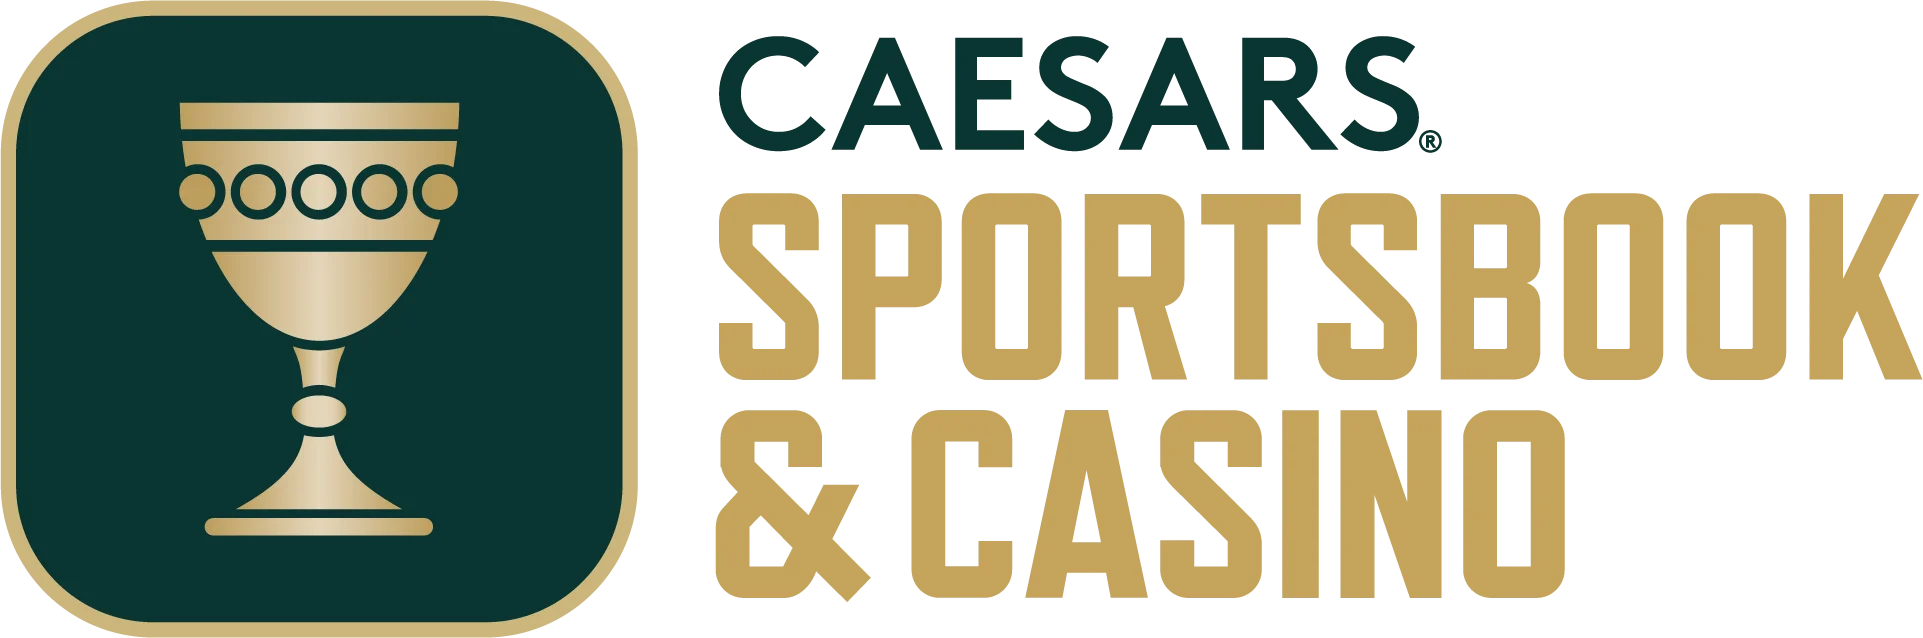 caesars-casino-and-sportsbook-logo